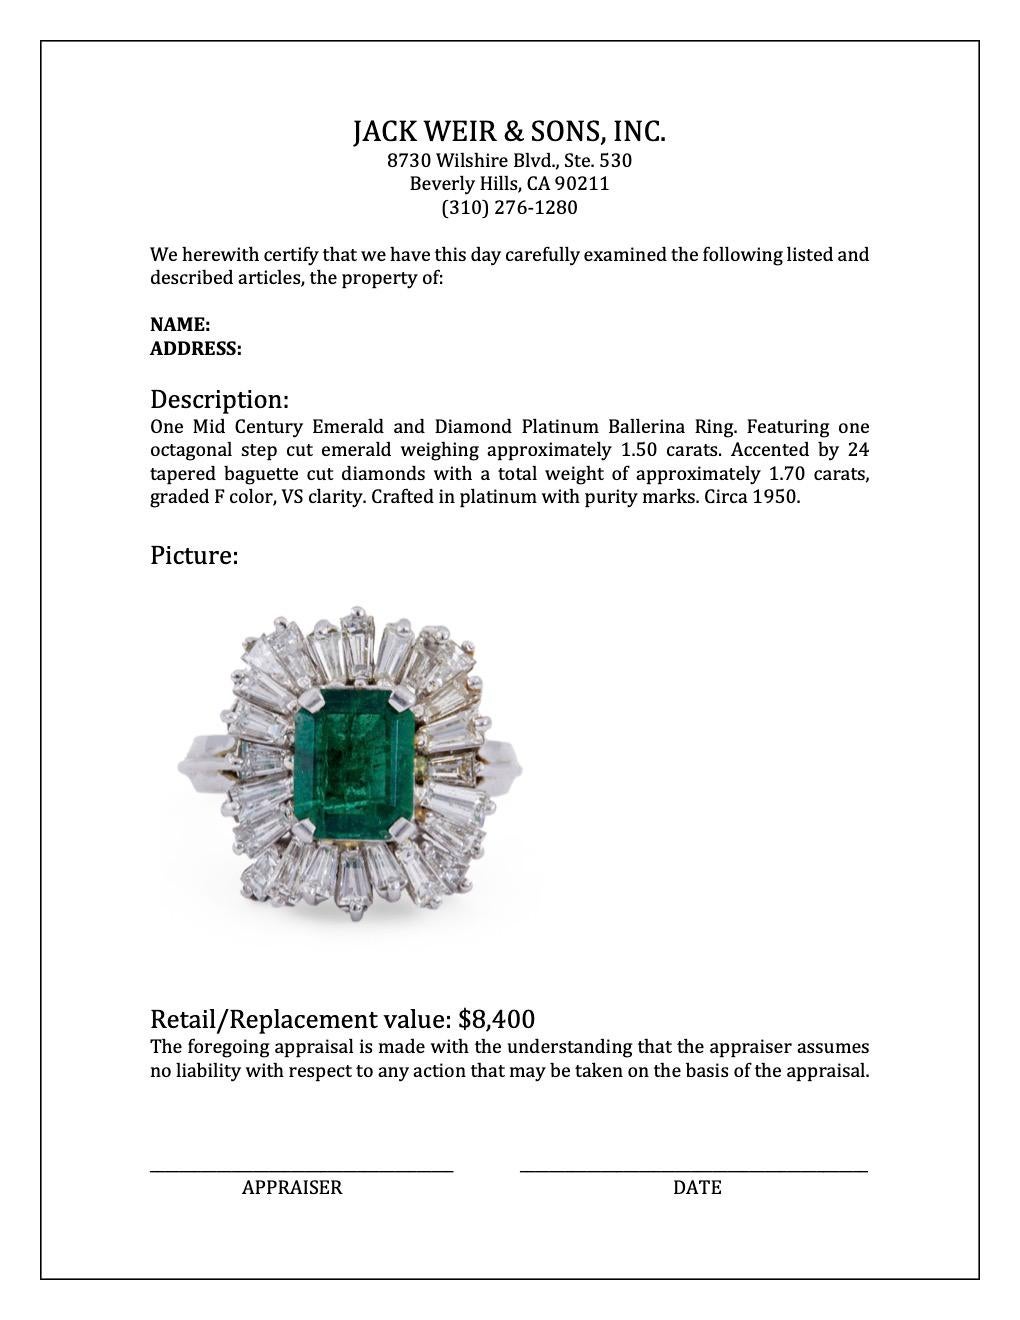 Women's or Men's Mid Century Emerald and Diamond Platinum Ballerina Ring